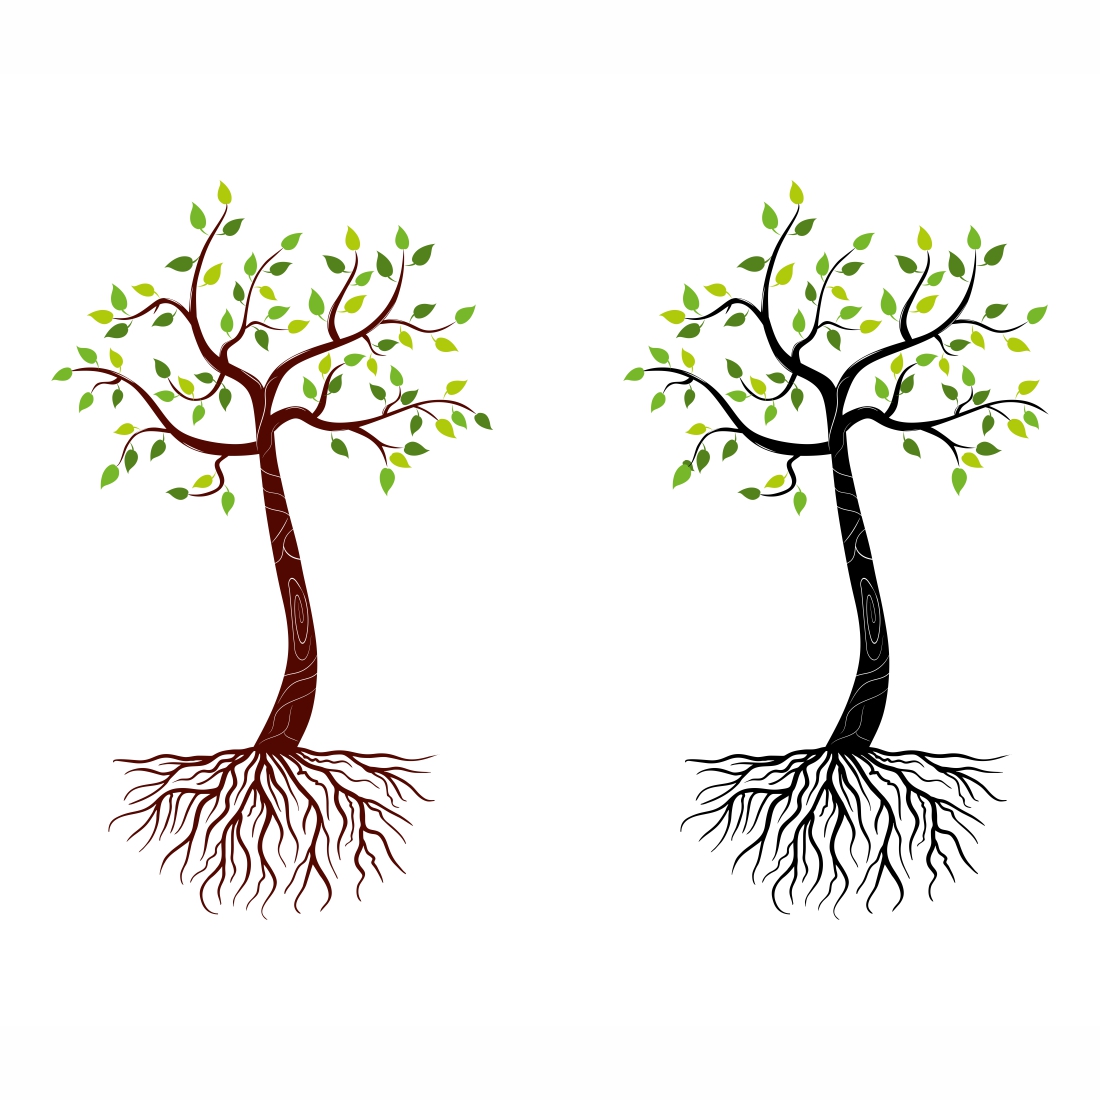 Tree logo cover image.